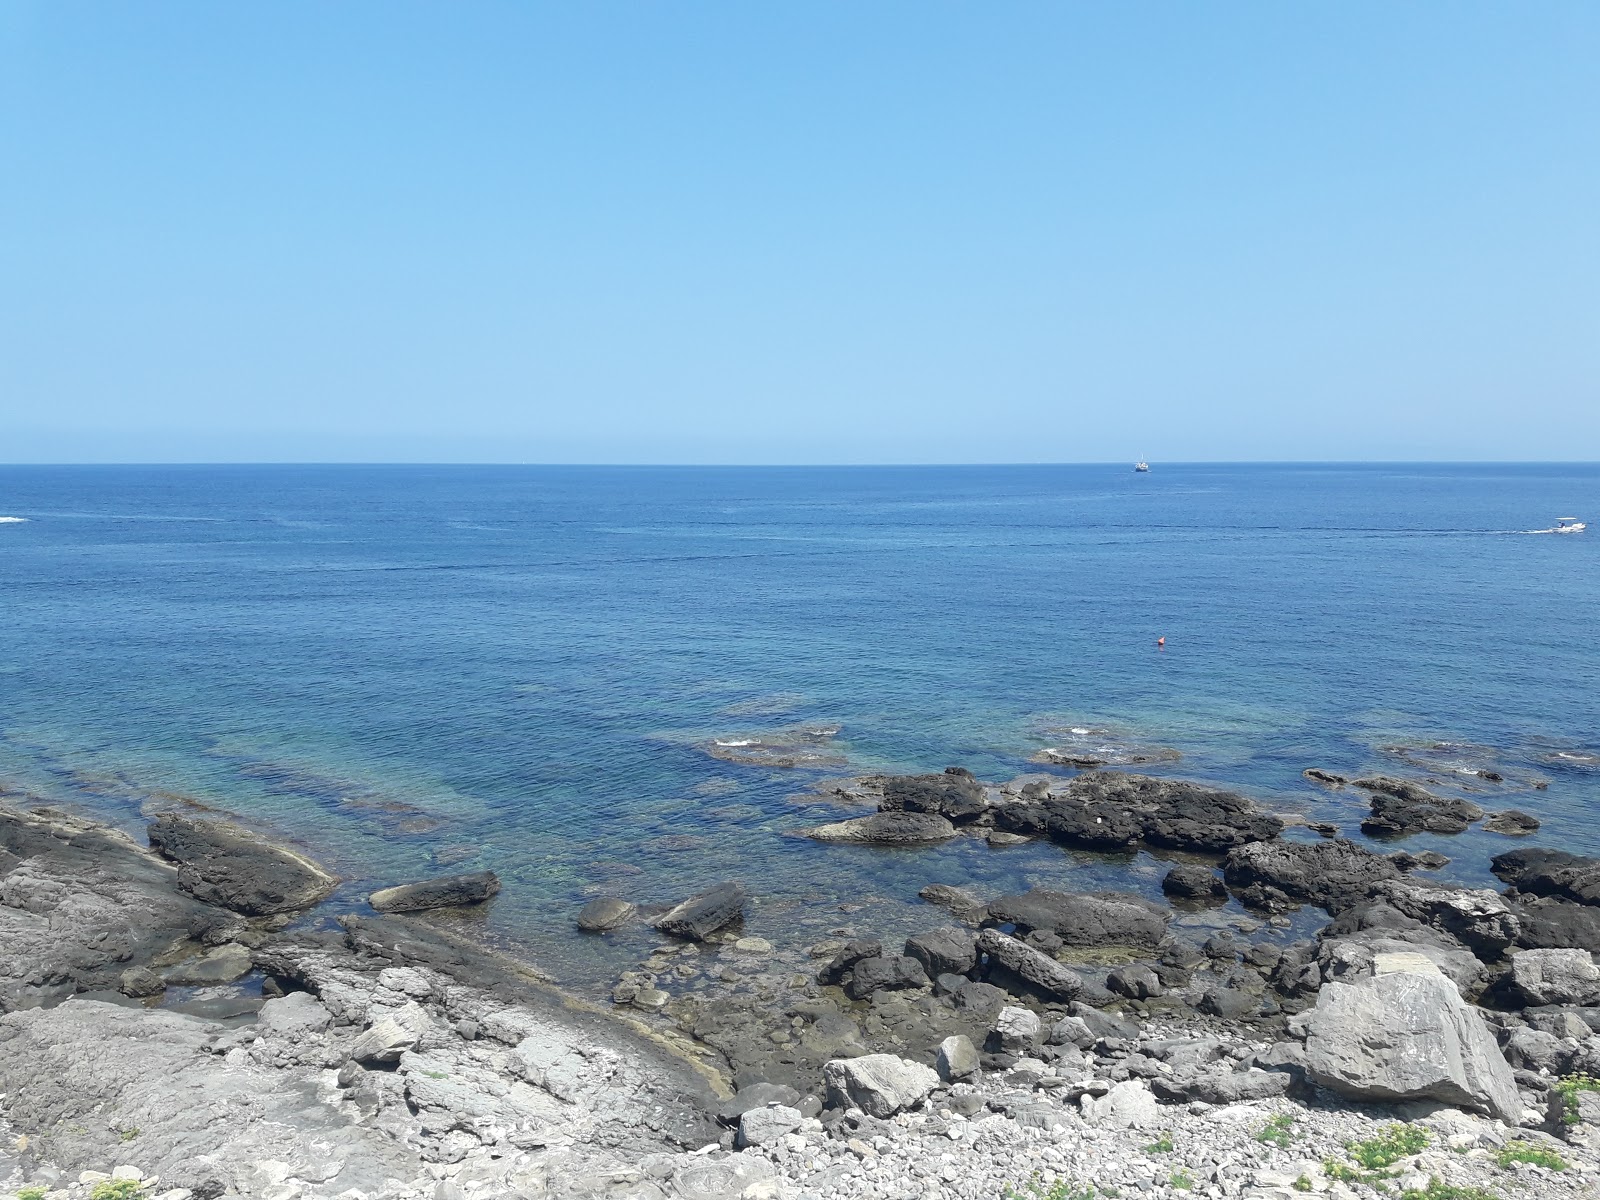 Foto von Spiaggia de Rotolo wilde gegend